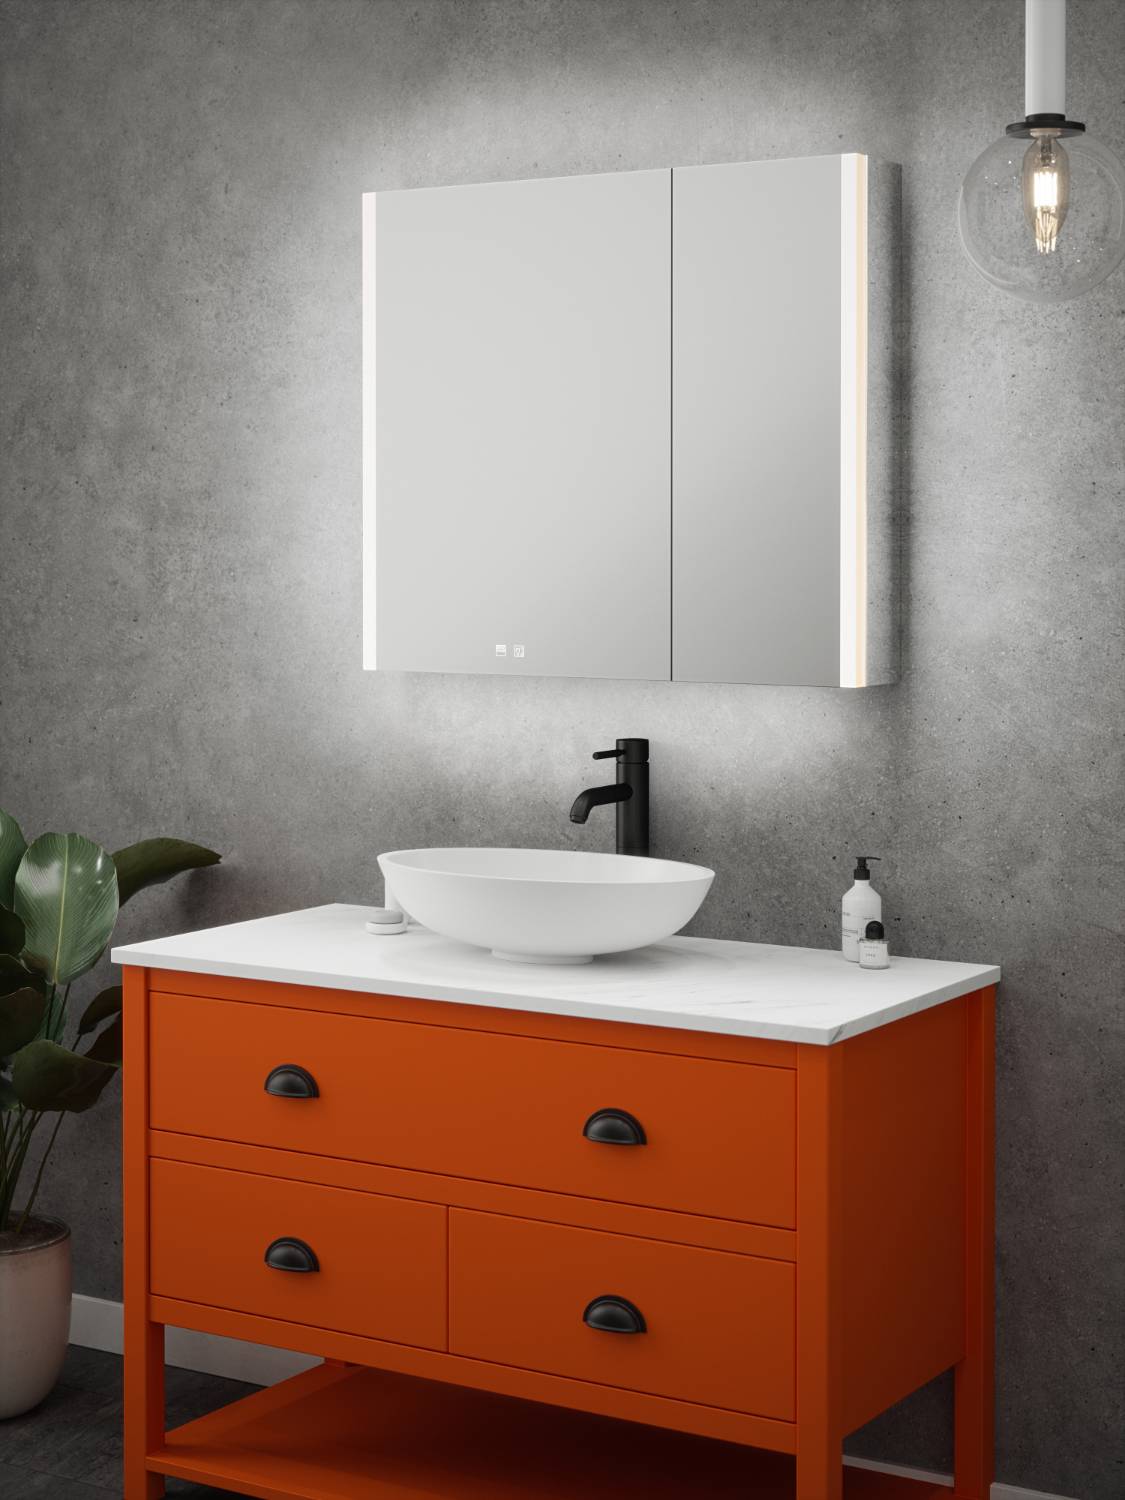 Mirror Cabinet - Balmoral Illuminated CCT LED Cabinet - SY9046 - LED Mirror Cabinet with Lighting